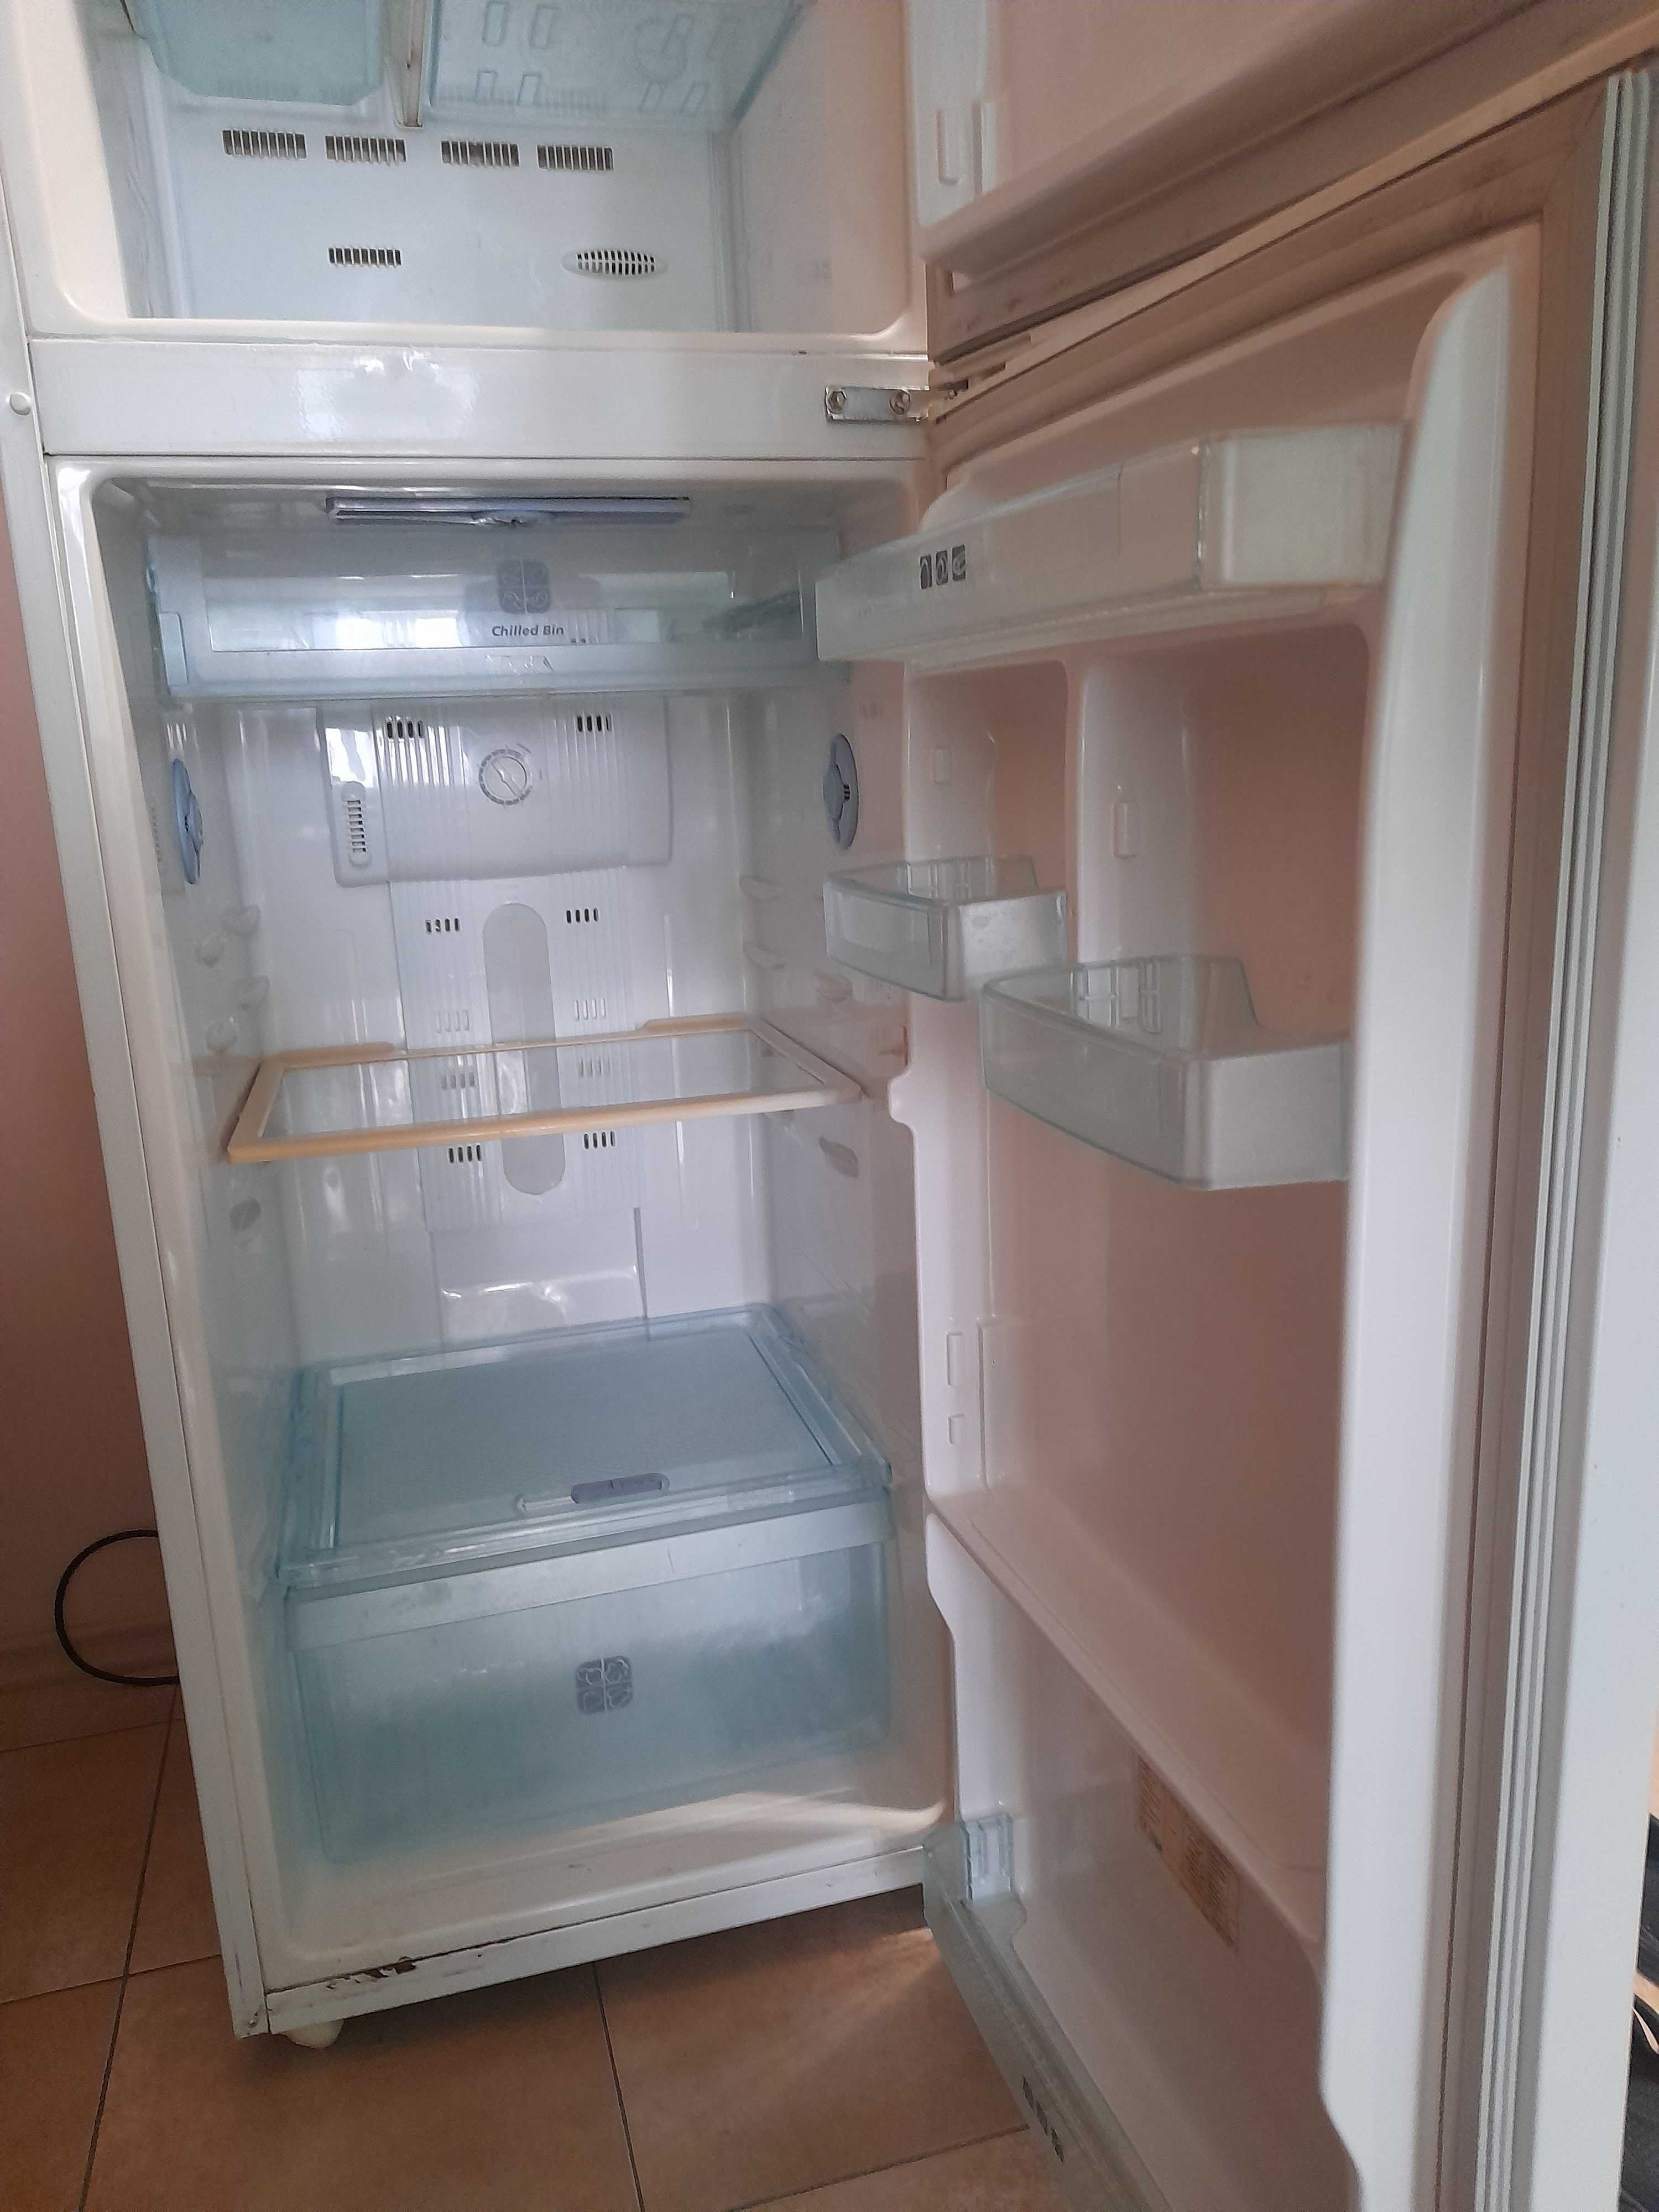 Продам холодильник Самсунг/ Samsung ноу фрост/no frost